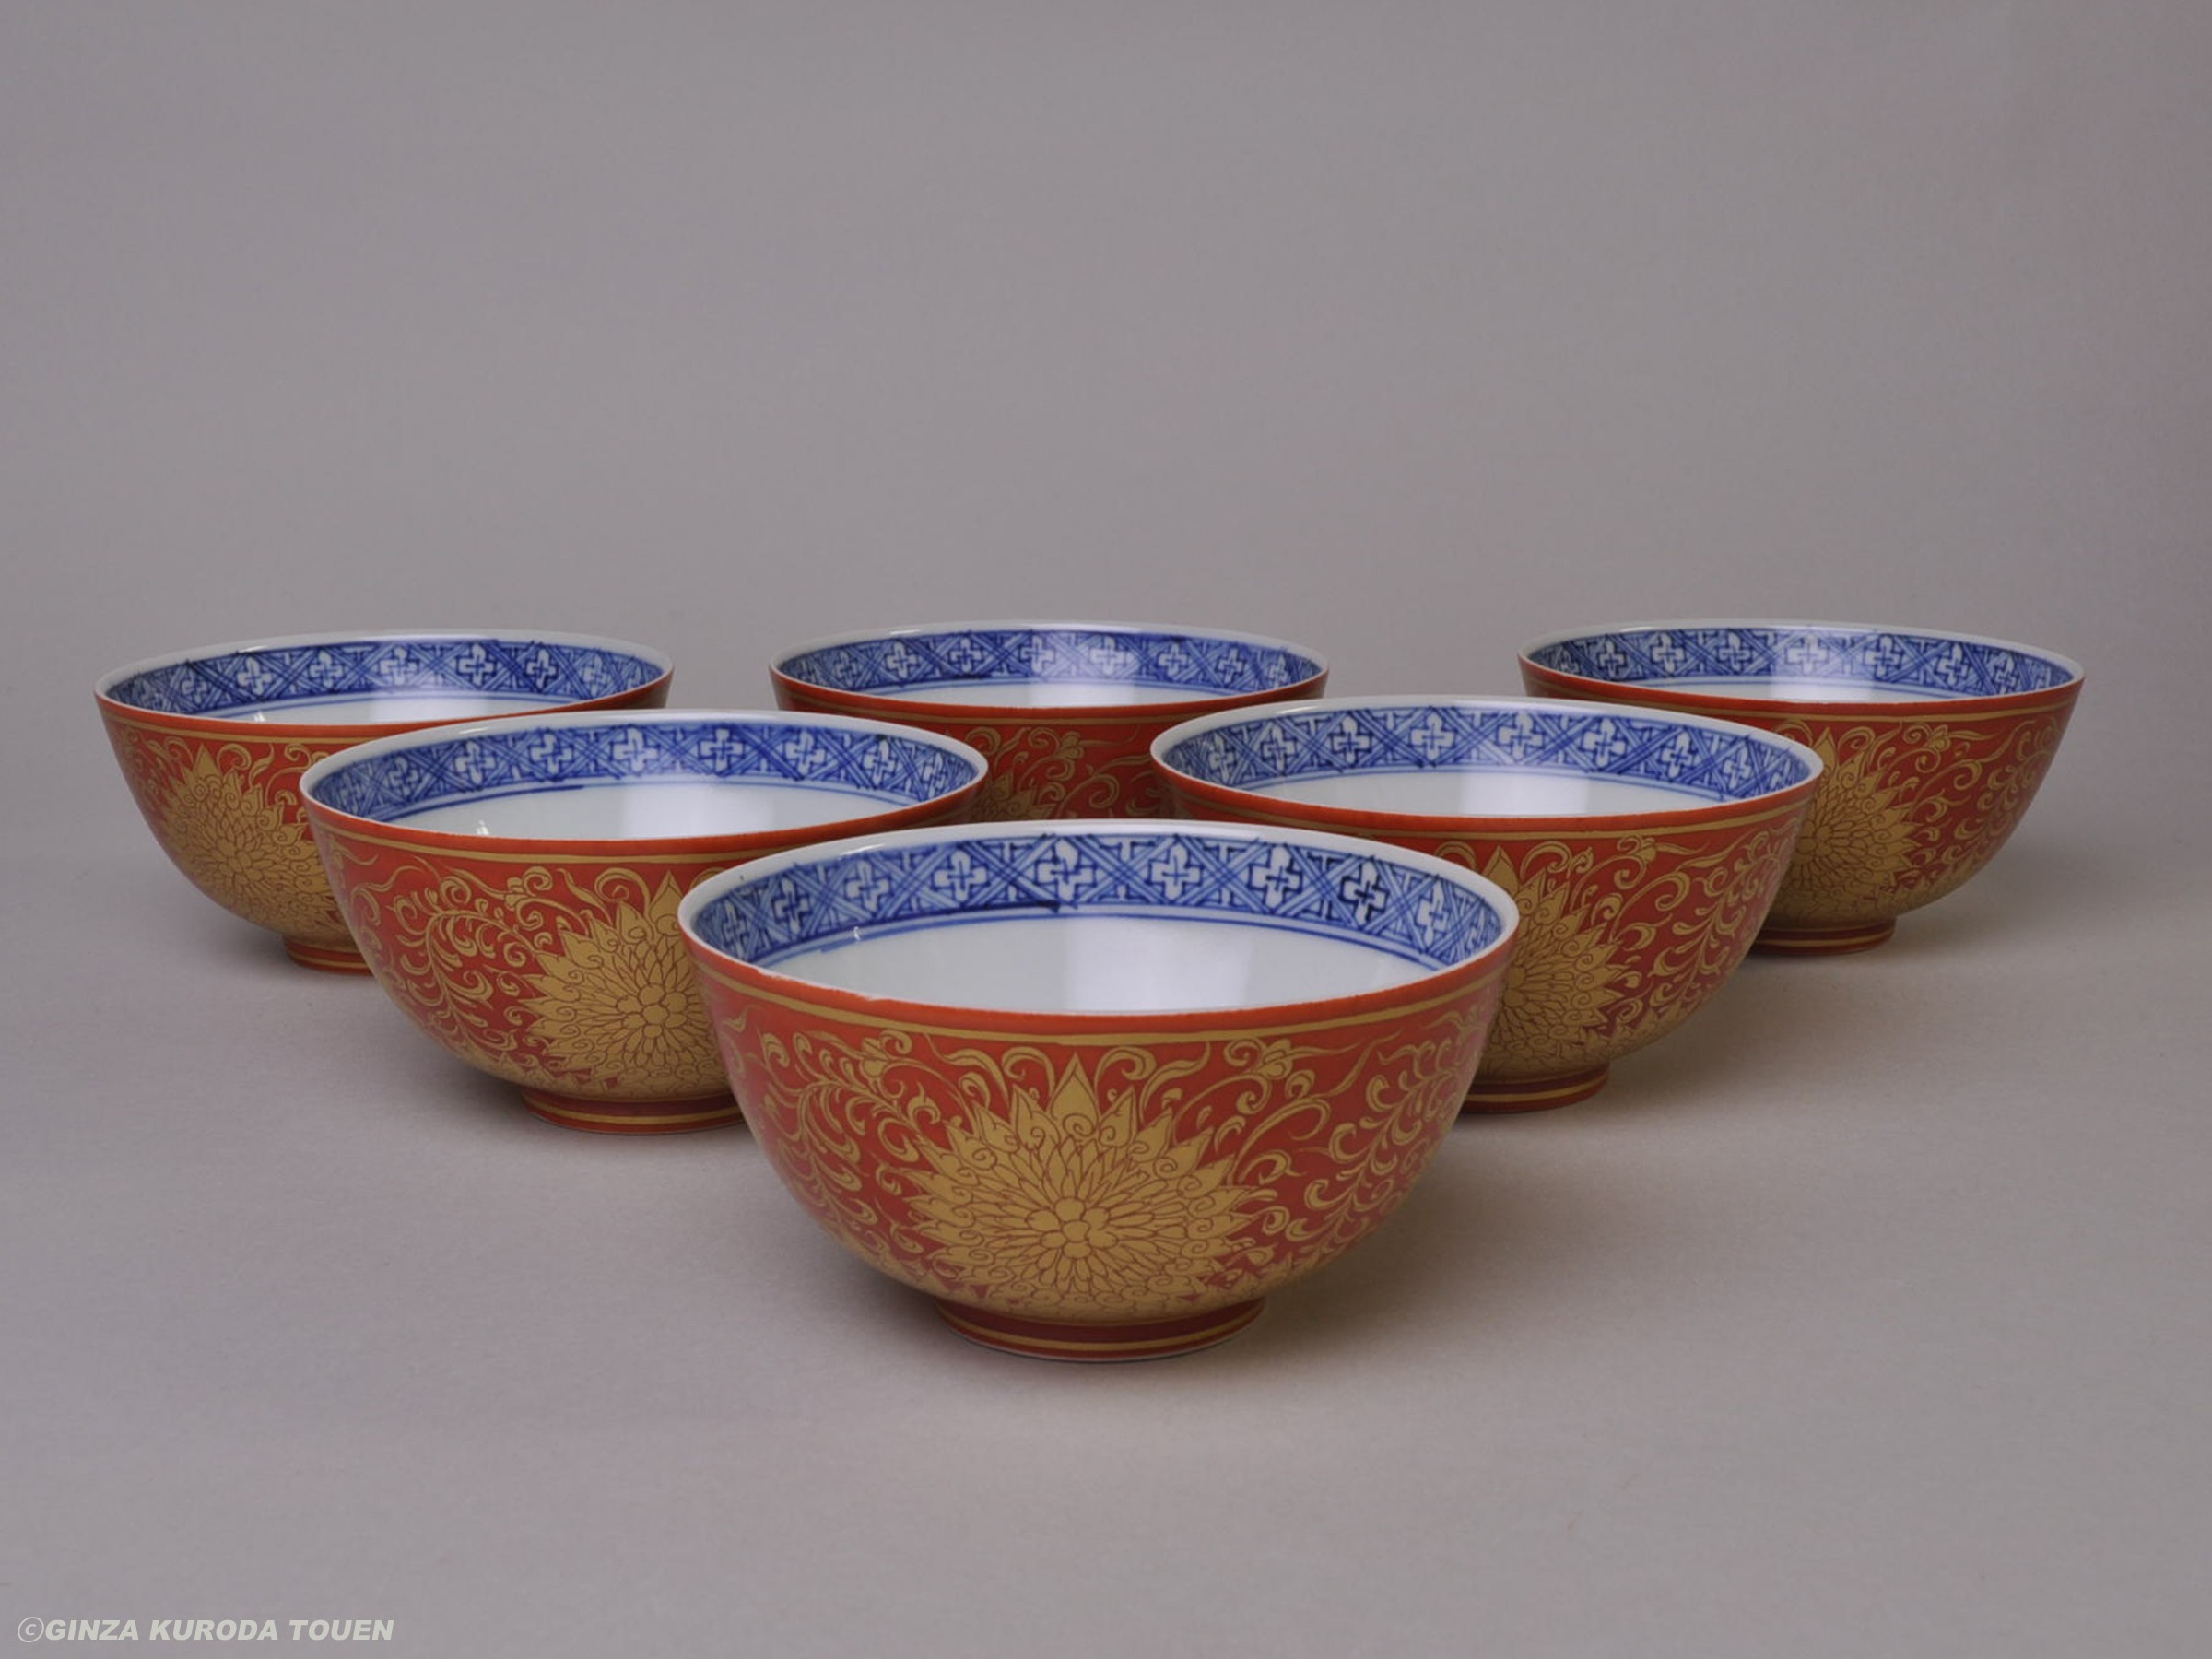 Chikushun Kawase I: A set of bowls, Kinrande type